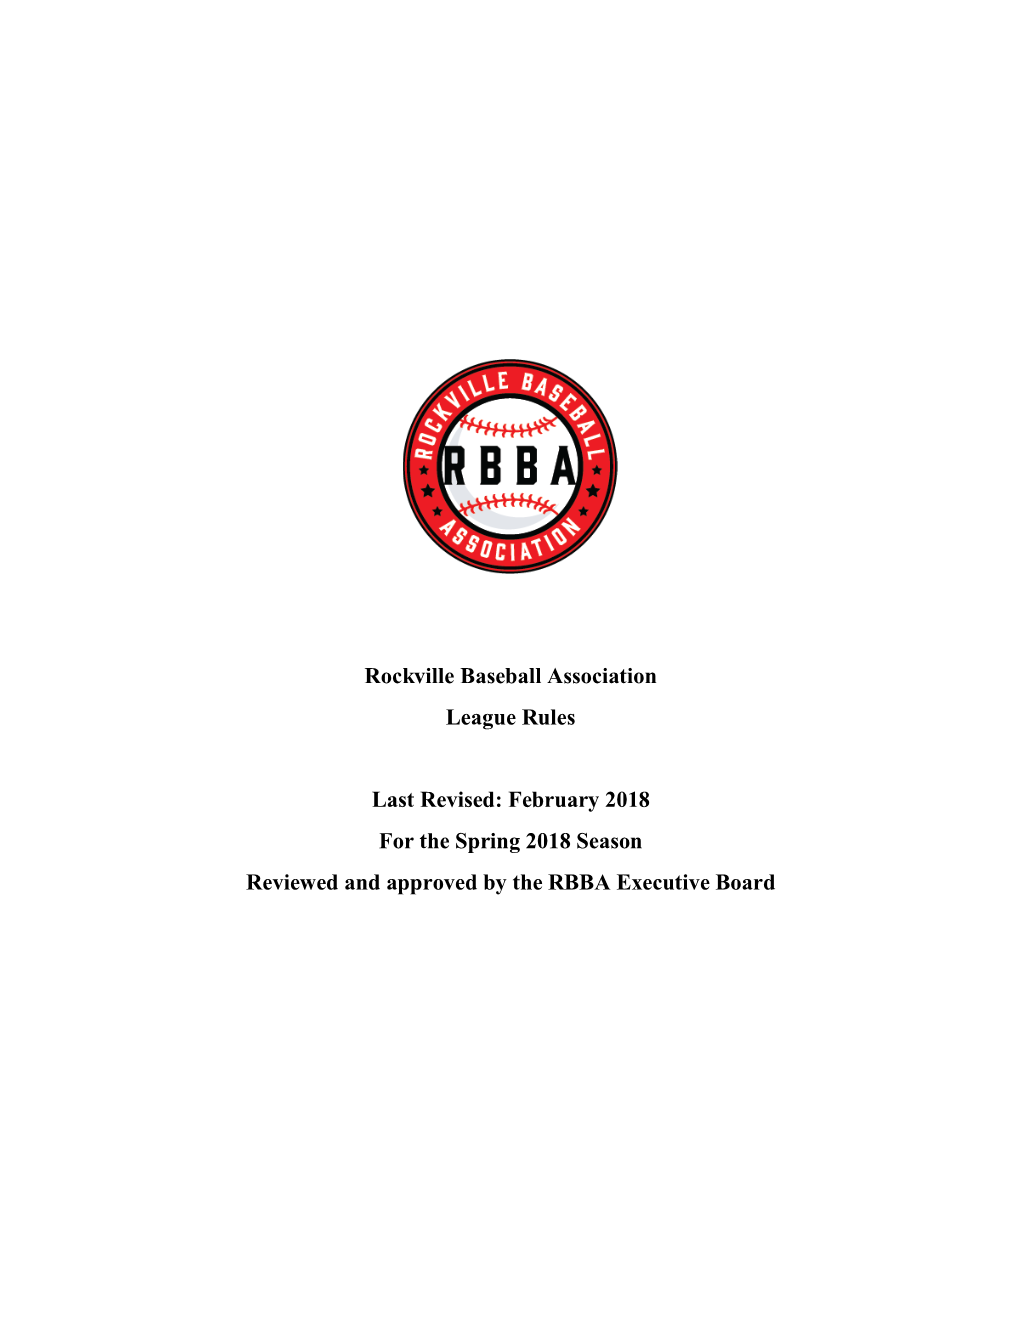 Rockville Baseball Association League Rules Last Revised